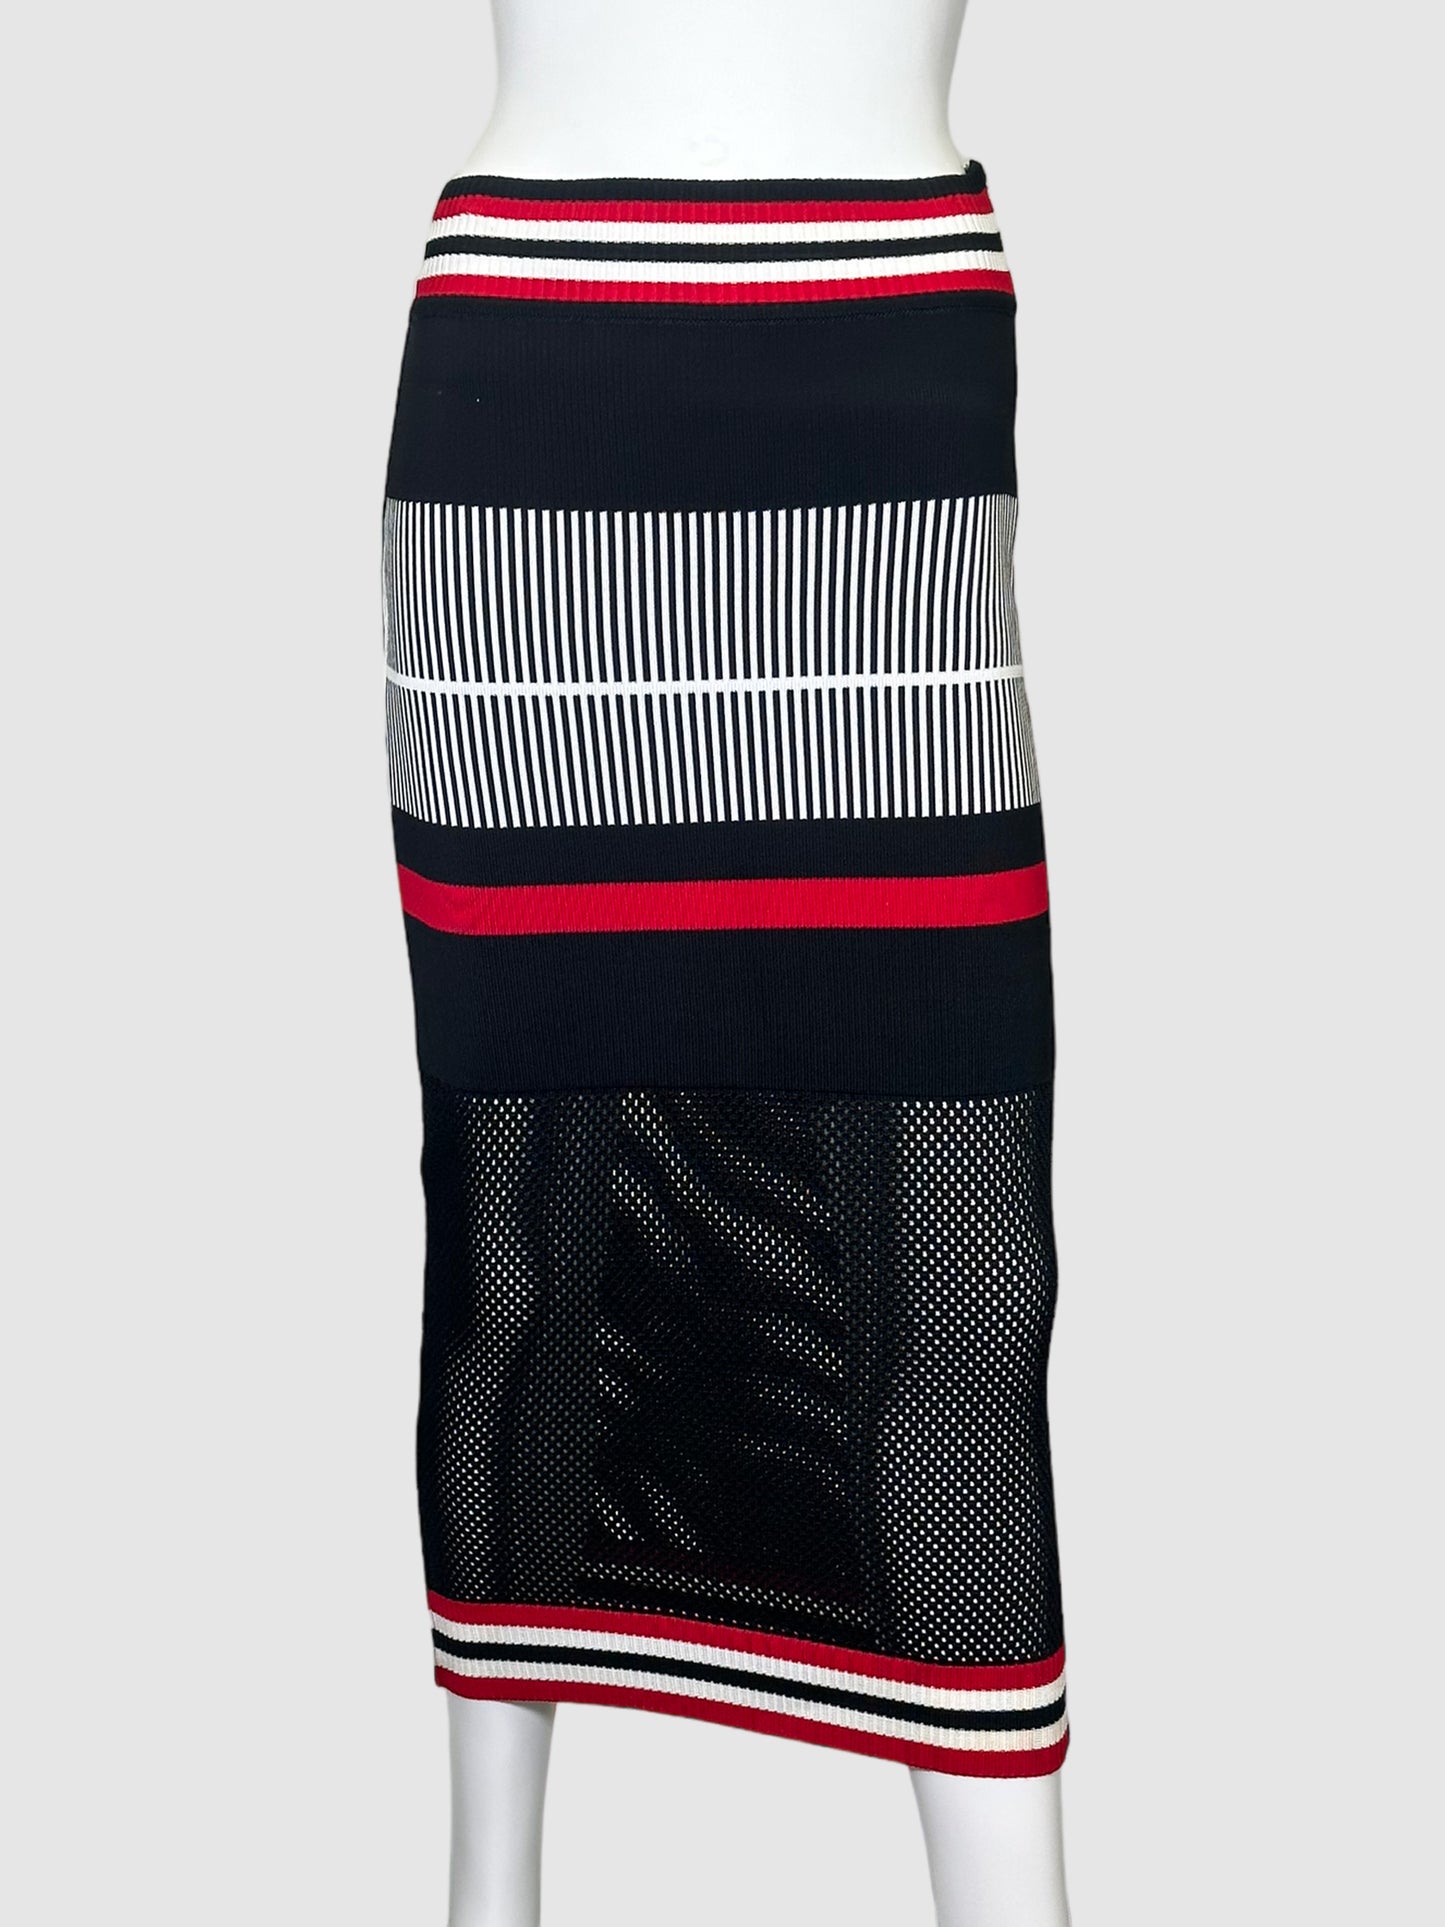 Skazi Knitted Pencil Skirt - Size S